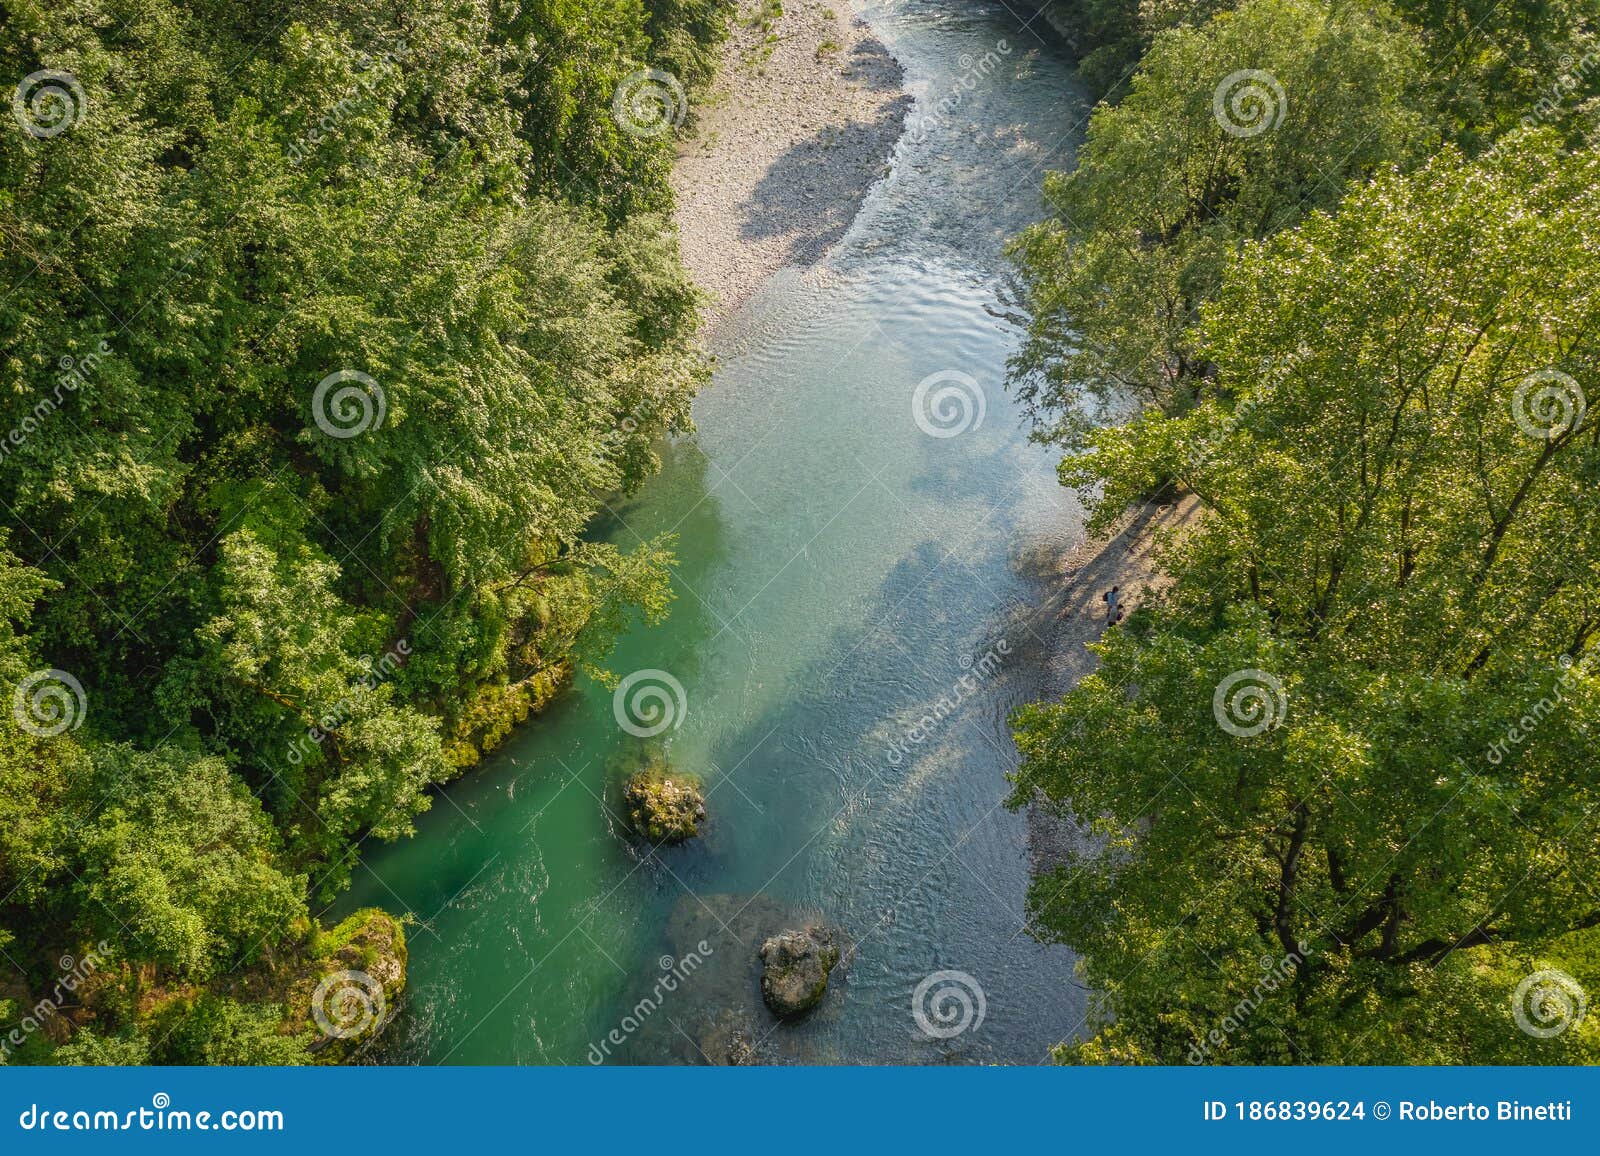 drone shot of the serio river